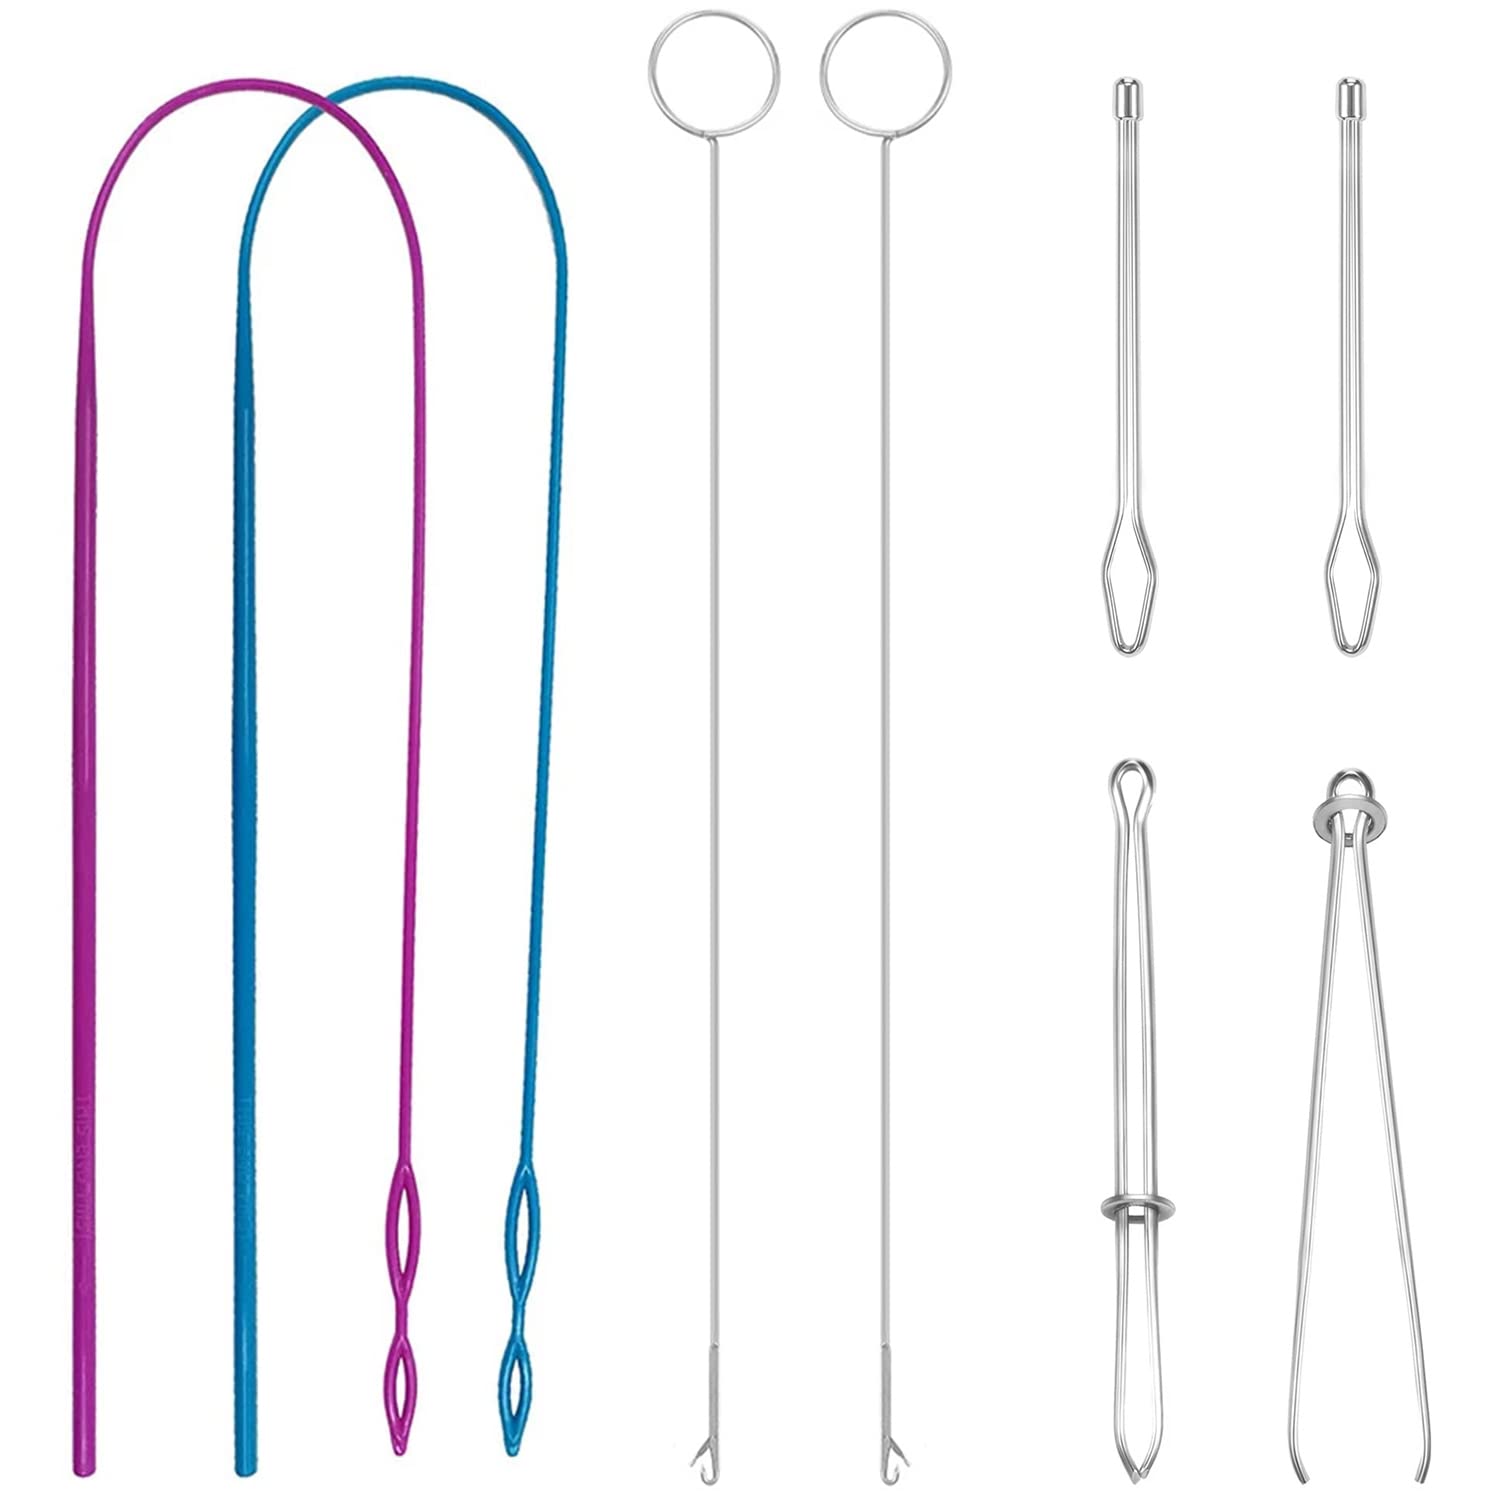 Drawstring Threader Drawstring Replacement Tool Household String Threader